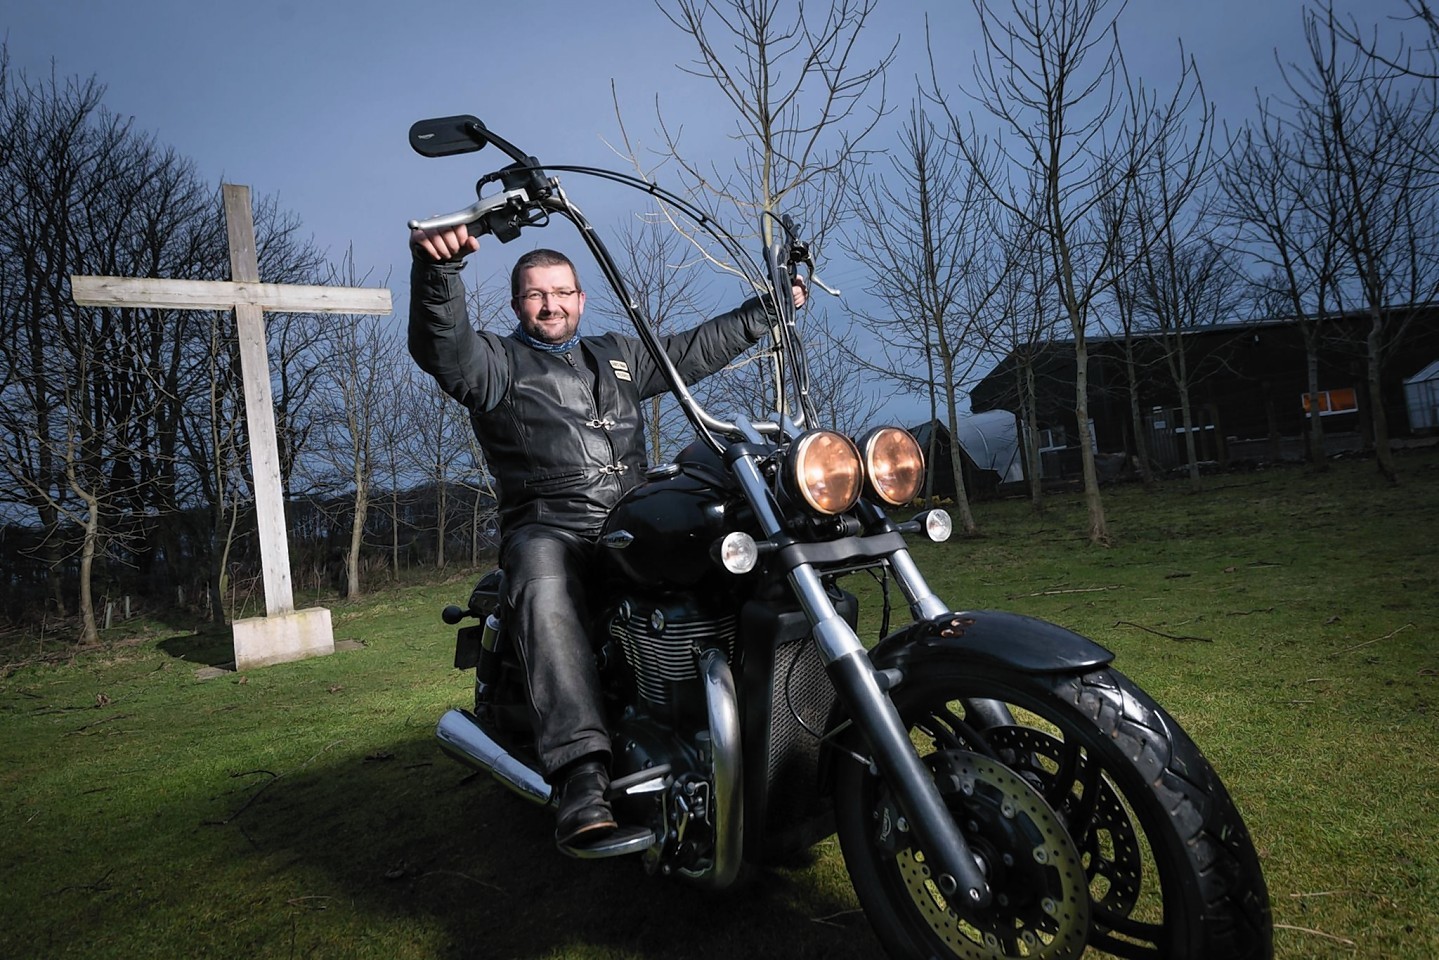 Gordon Cruden on his bike that he will take across Europe